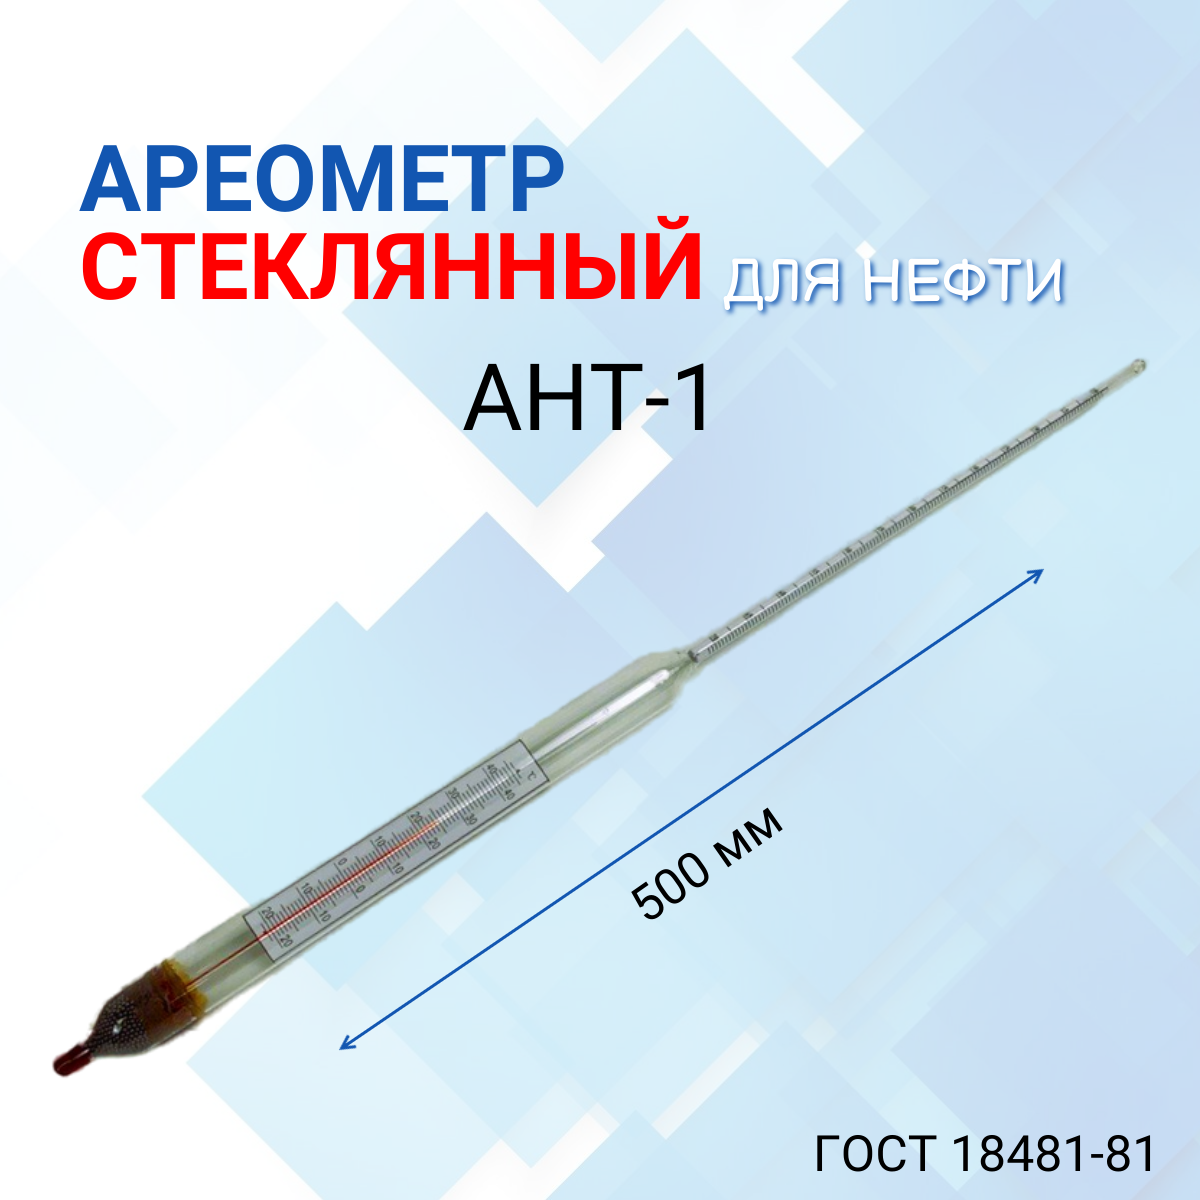 Ареометр "АНТ-1" 710-770 с поверкой РФ